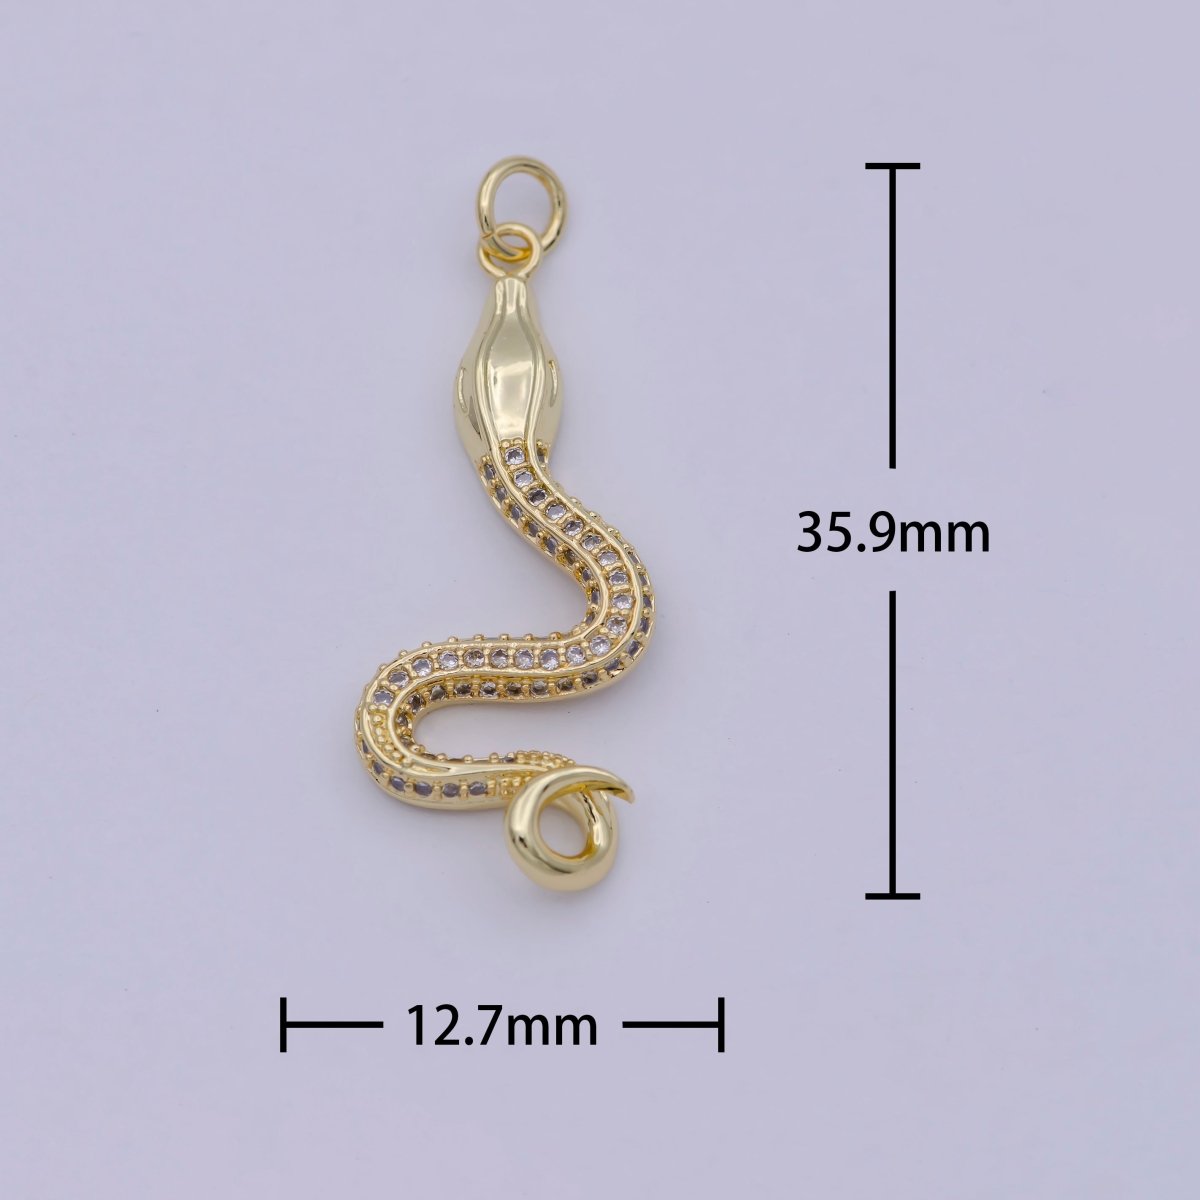 24K Gold Filled Snake Charms 3D Gold Snake Pendant -Micro Pave Snake Charms Cubic Snake Pendant for Necklace SupplyC-300 - DLUXCA